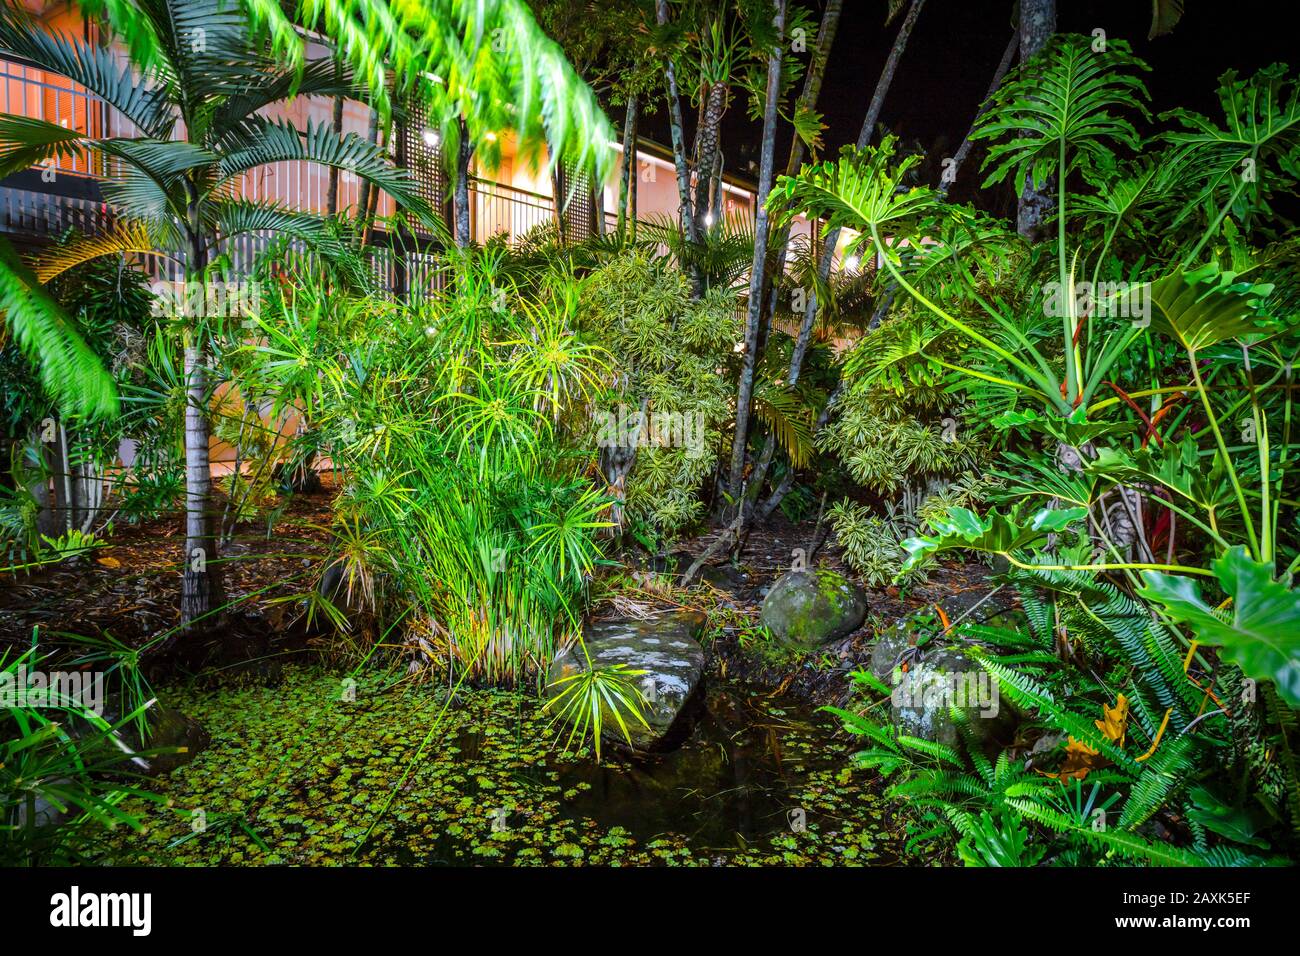 Australia, garden, palm trees, vegetation Stock Photo